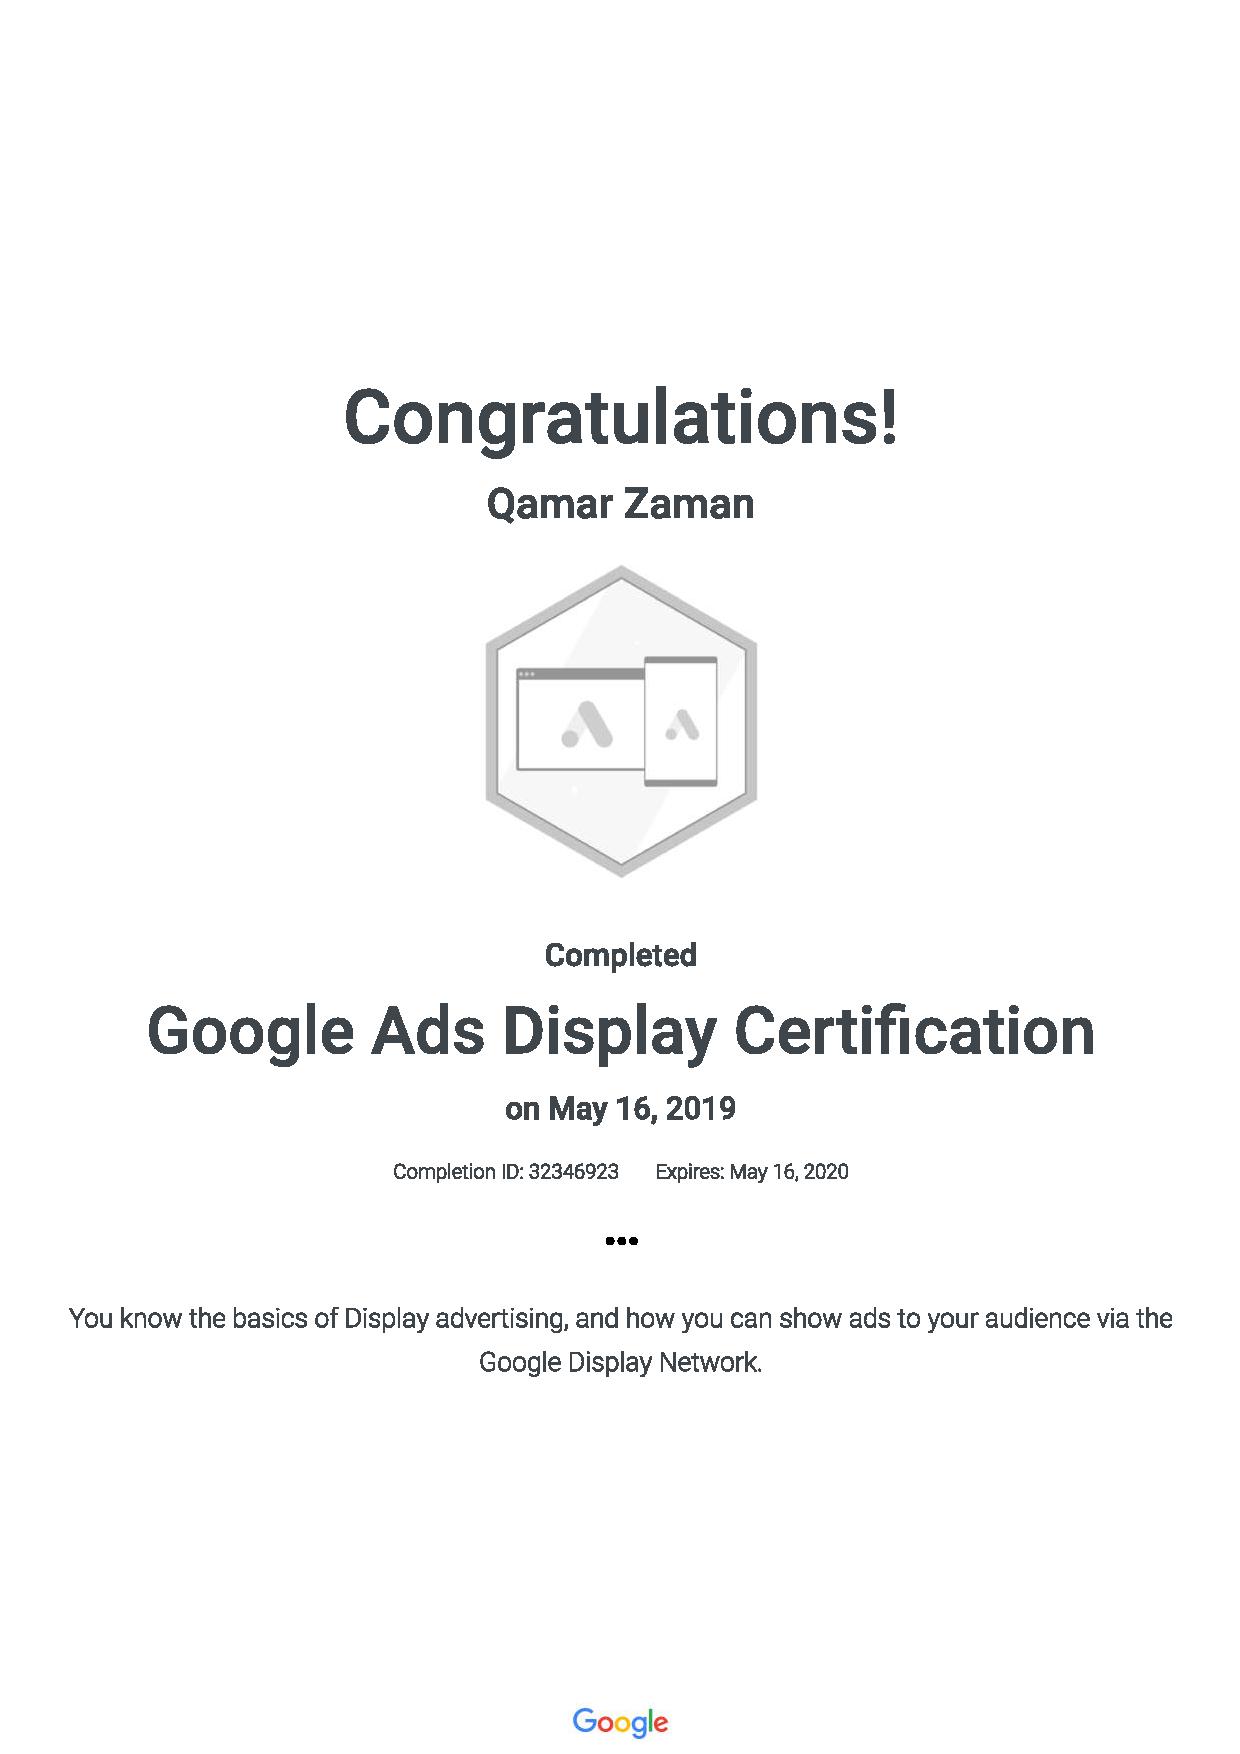 Google Ads Display Certification 201905